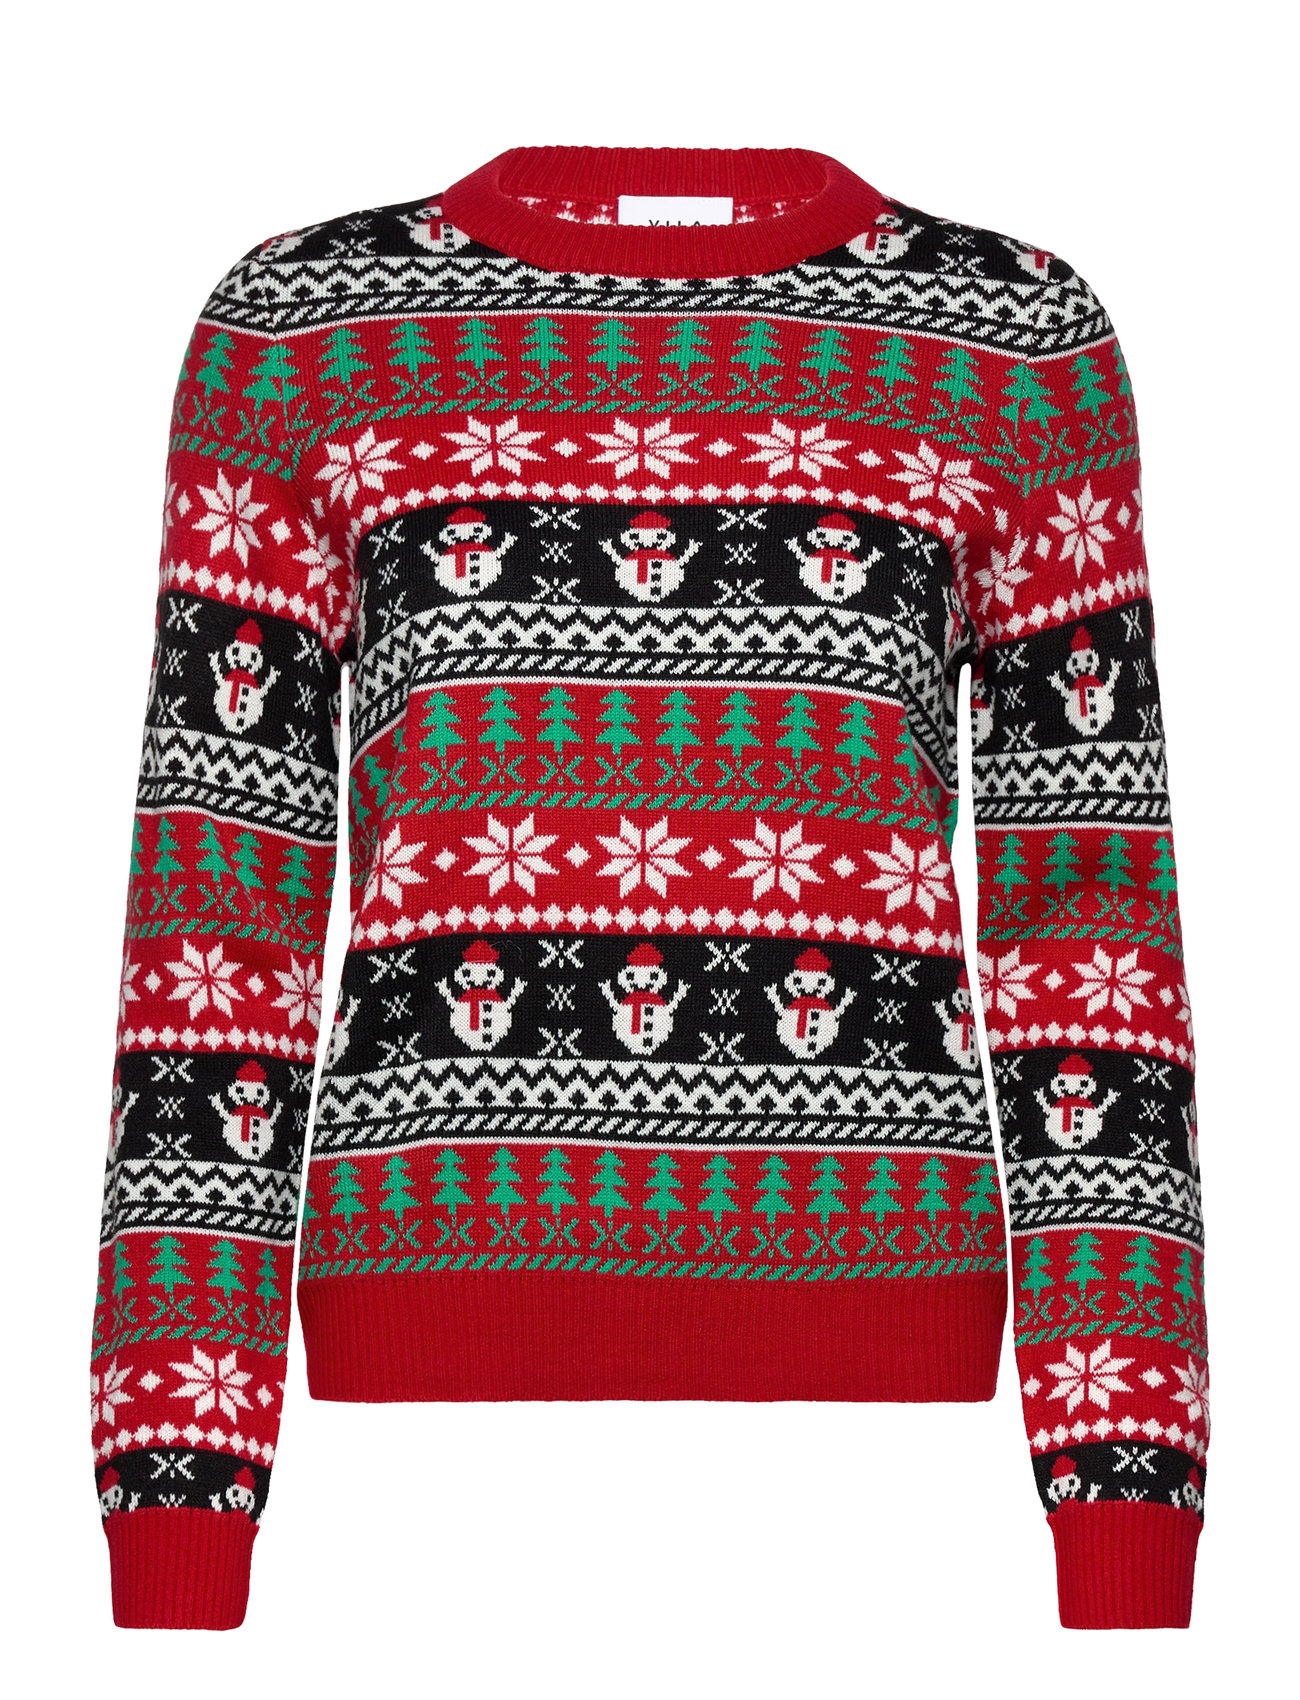 Viholy L/S Christmas Knit Top/Ka Tops Knitwear Jumpers Red Vila